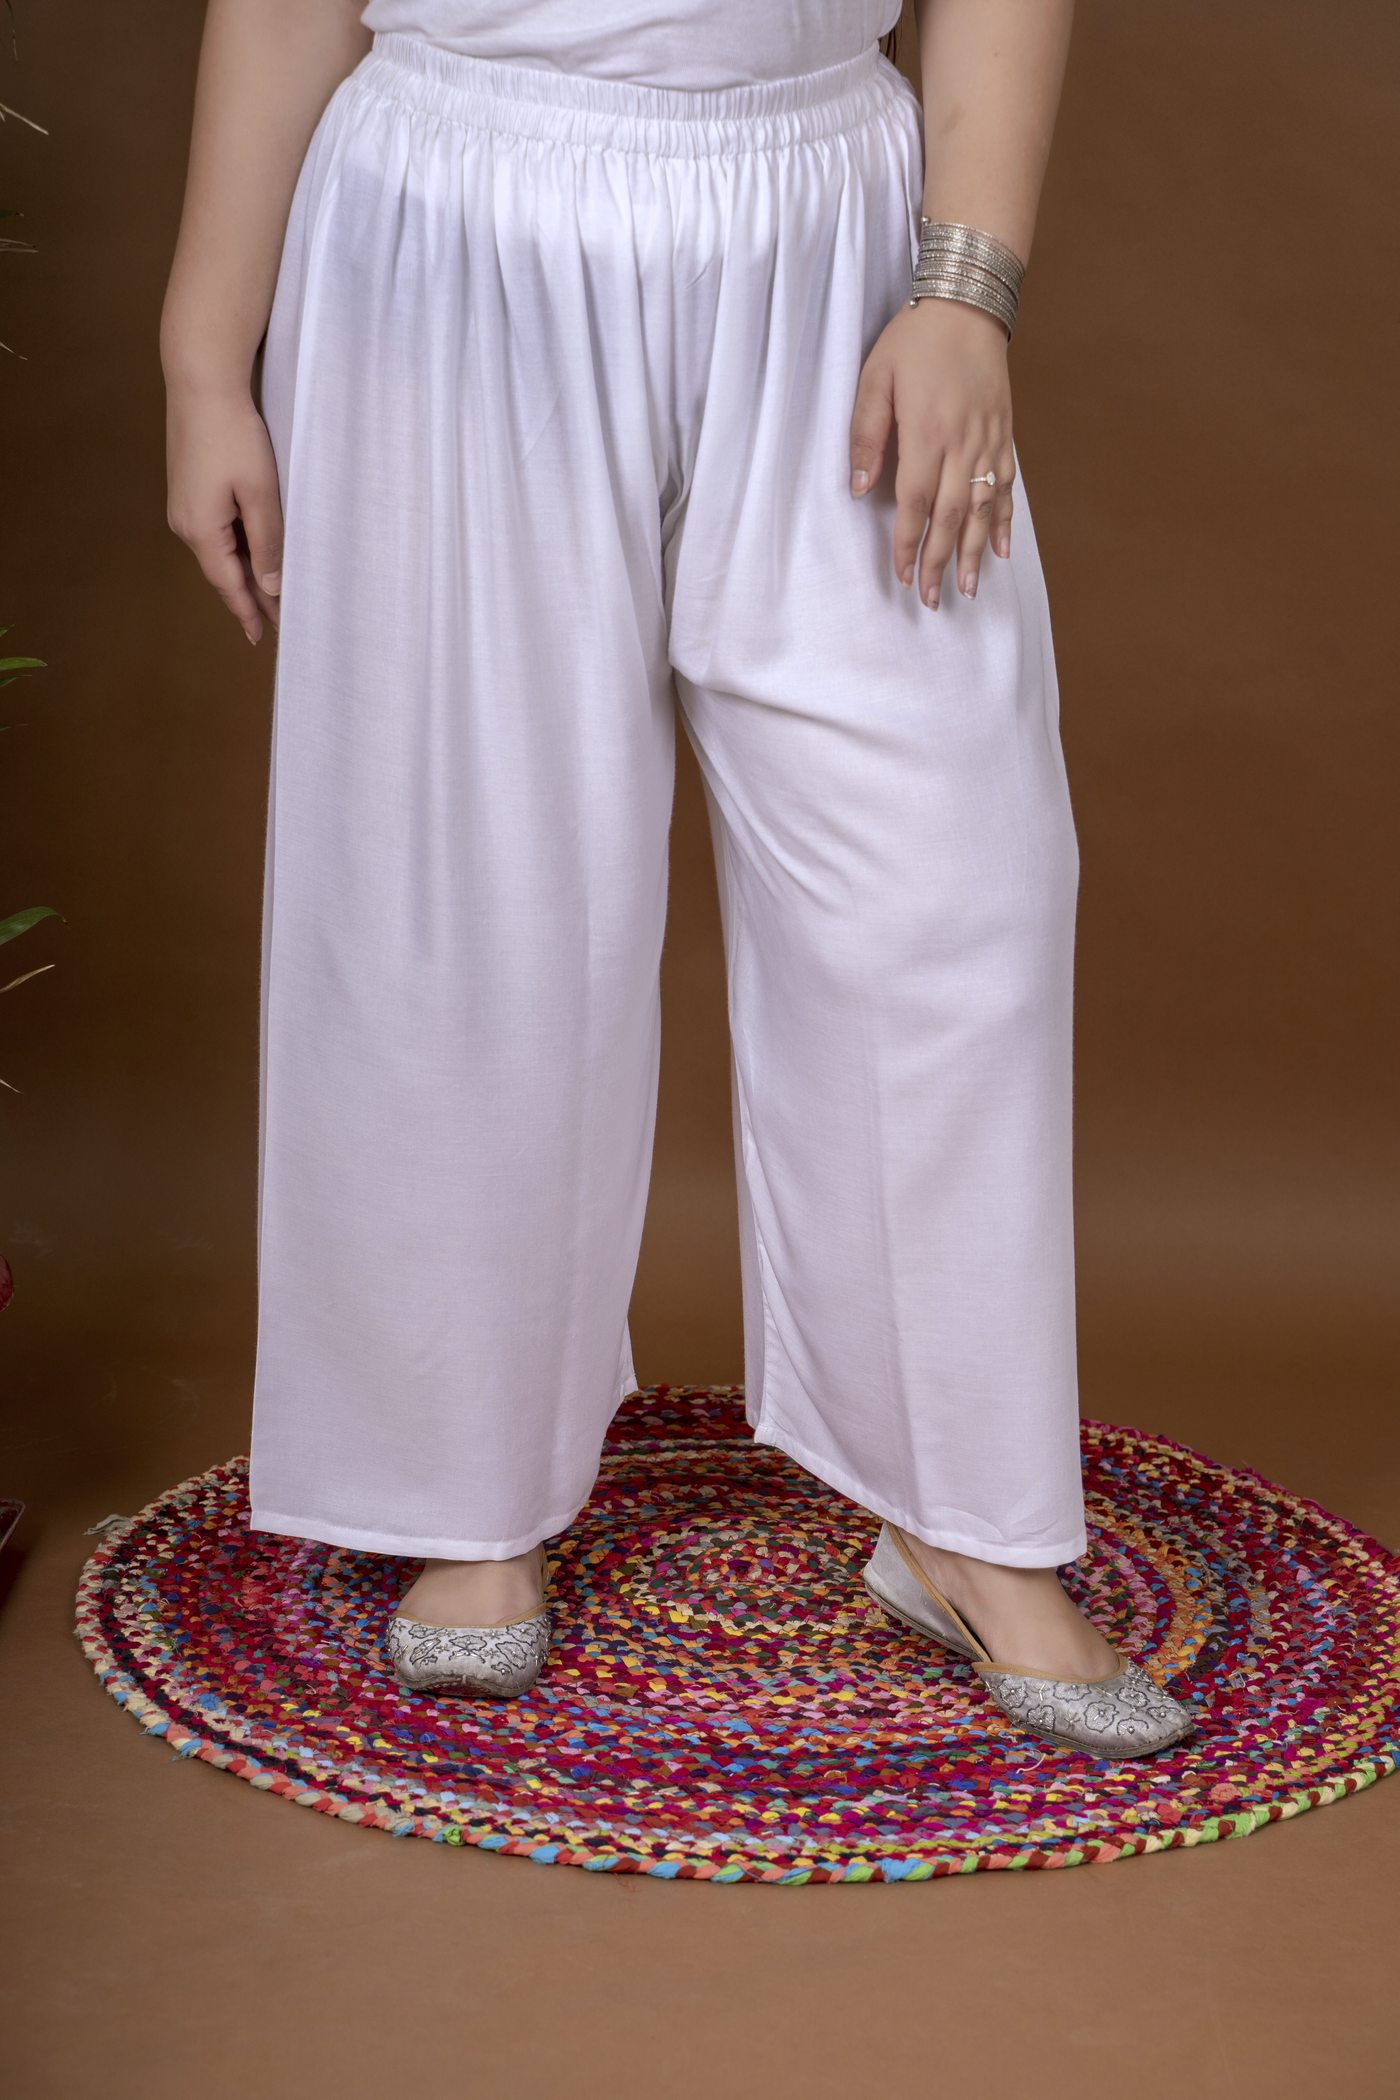 MRULIC pants for women Women Summer High Waisted Cotton Linen Palazzo Pants  Wide Leg Long Lounge Pant Trousers With Pocket White + S - Walmart.com